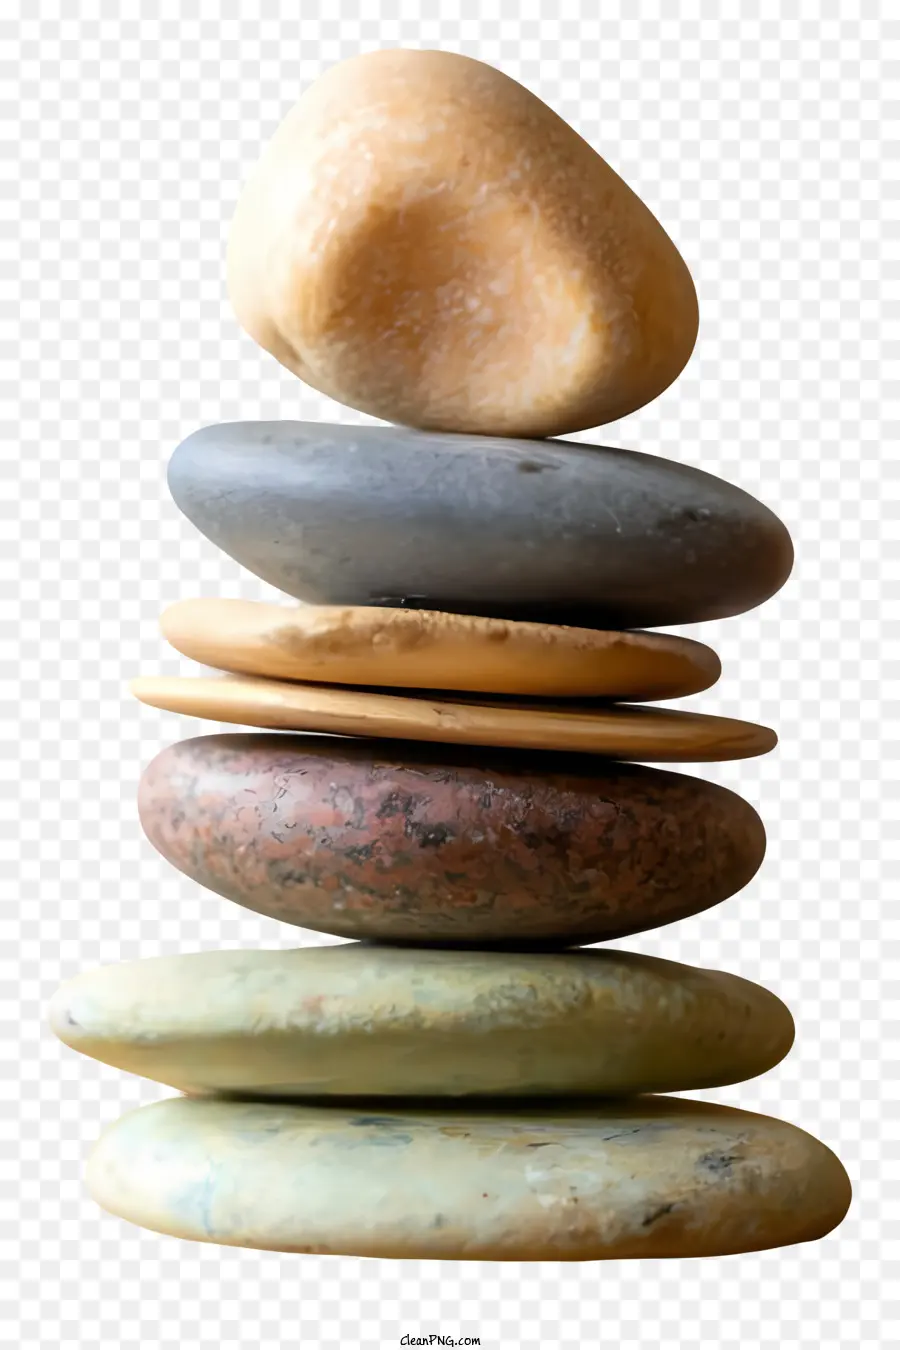 pietre rotonde lisce pietre colorate pietre di pietra pietre marroni - Pietre lisce, rotonde e colorate impilate in forma piramide